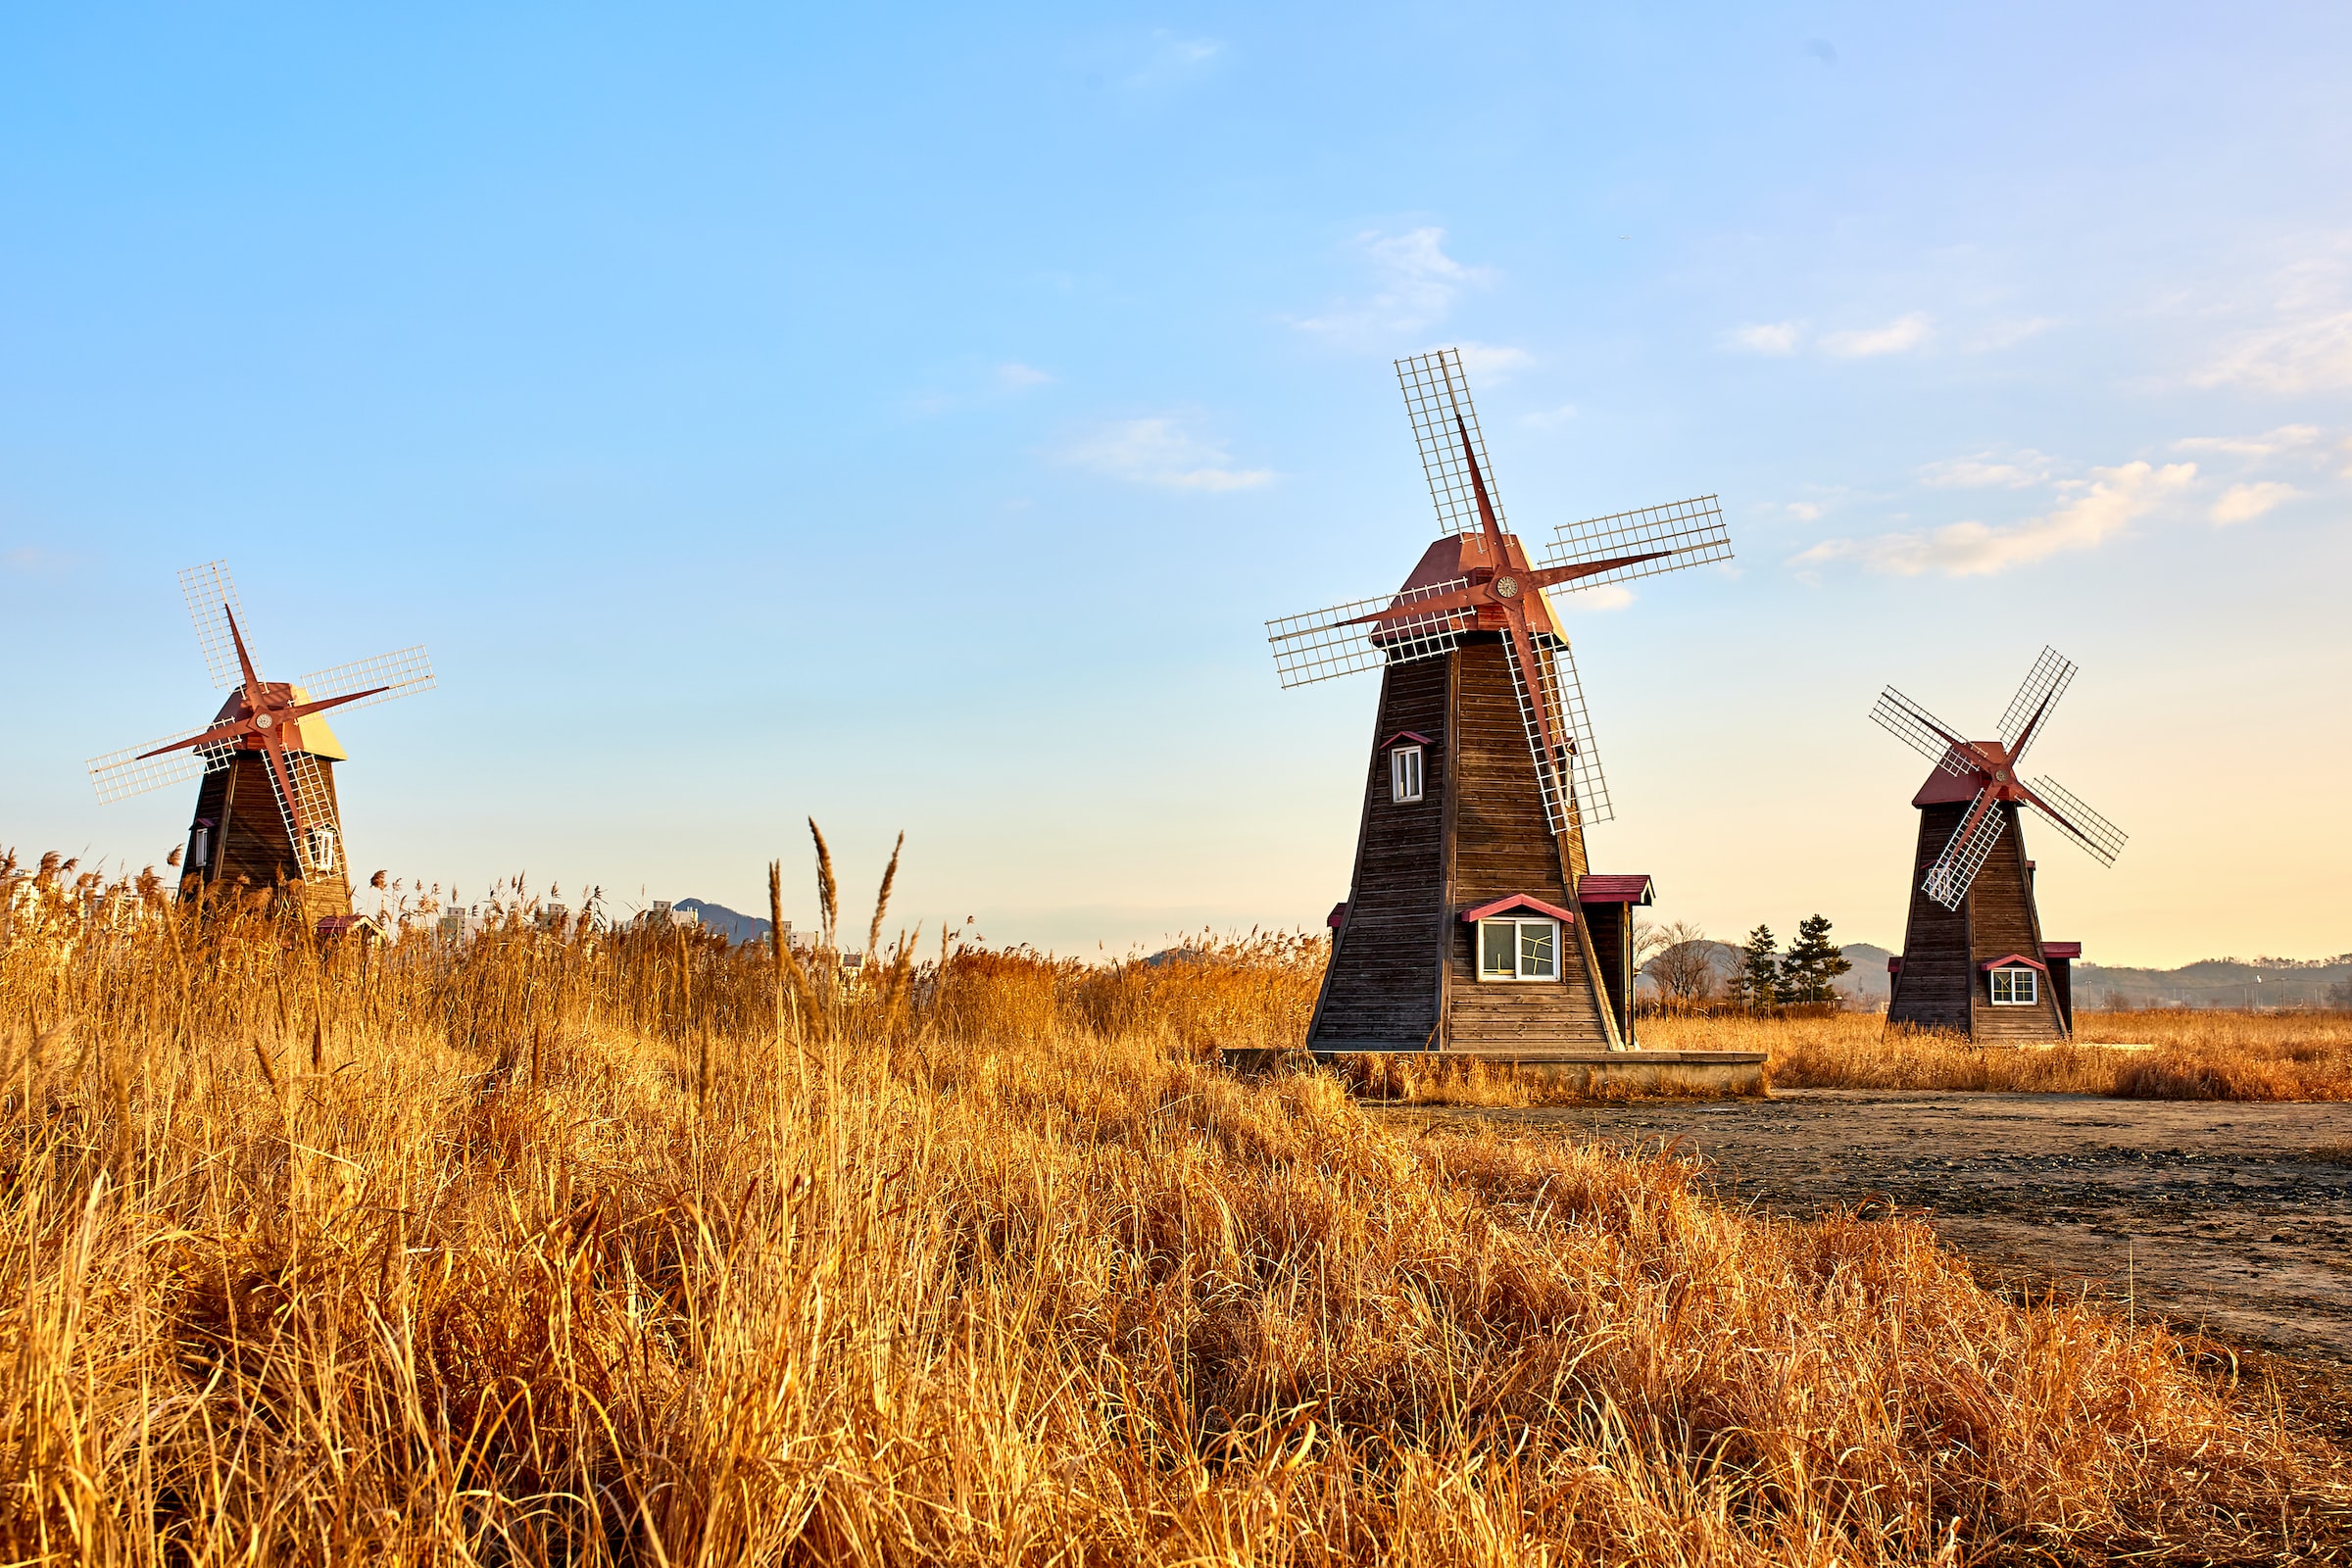 Wooden windmills in a grassy plain